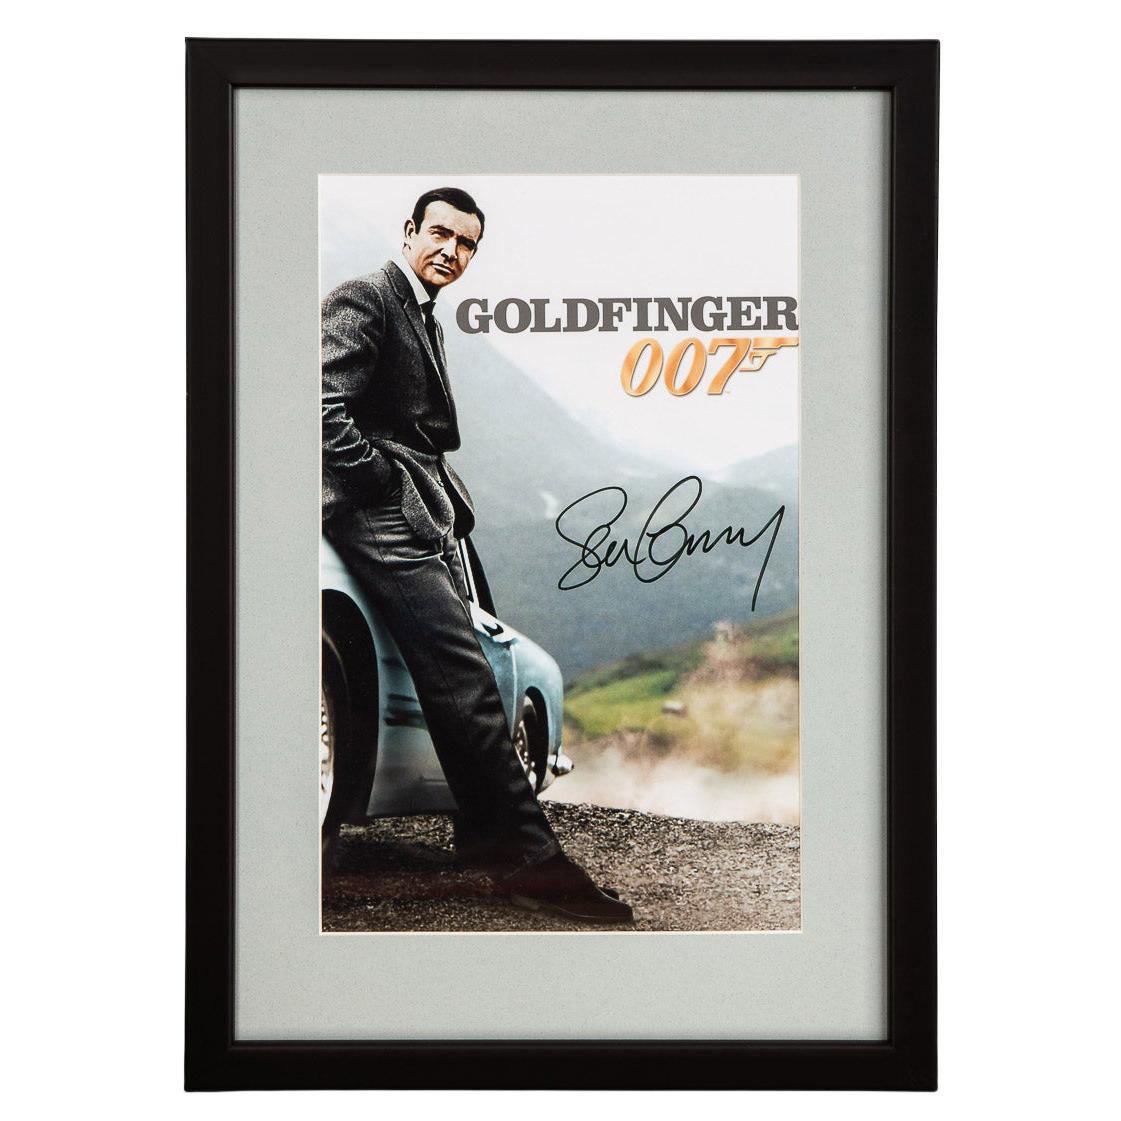 James Bond 007 Sean Connery Aston Martin Db5 Gerahmte Fotografie mit Signatur